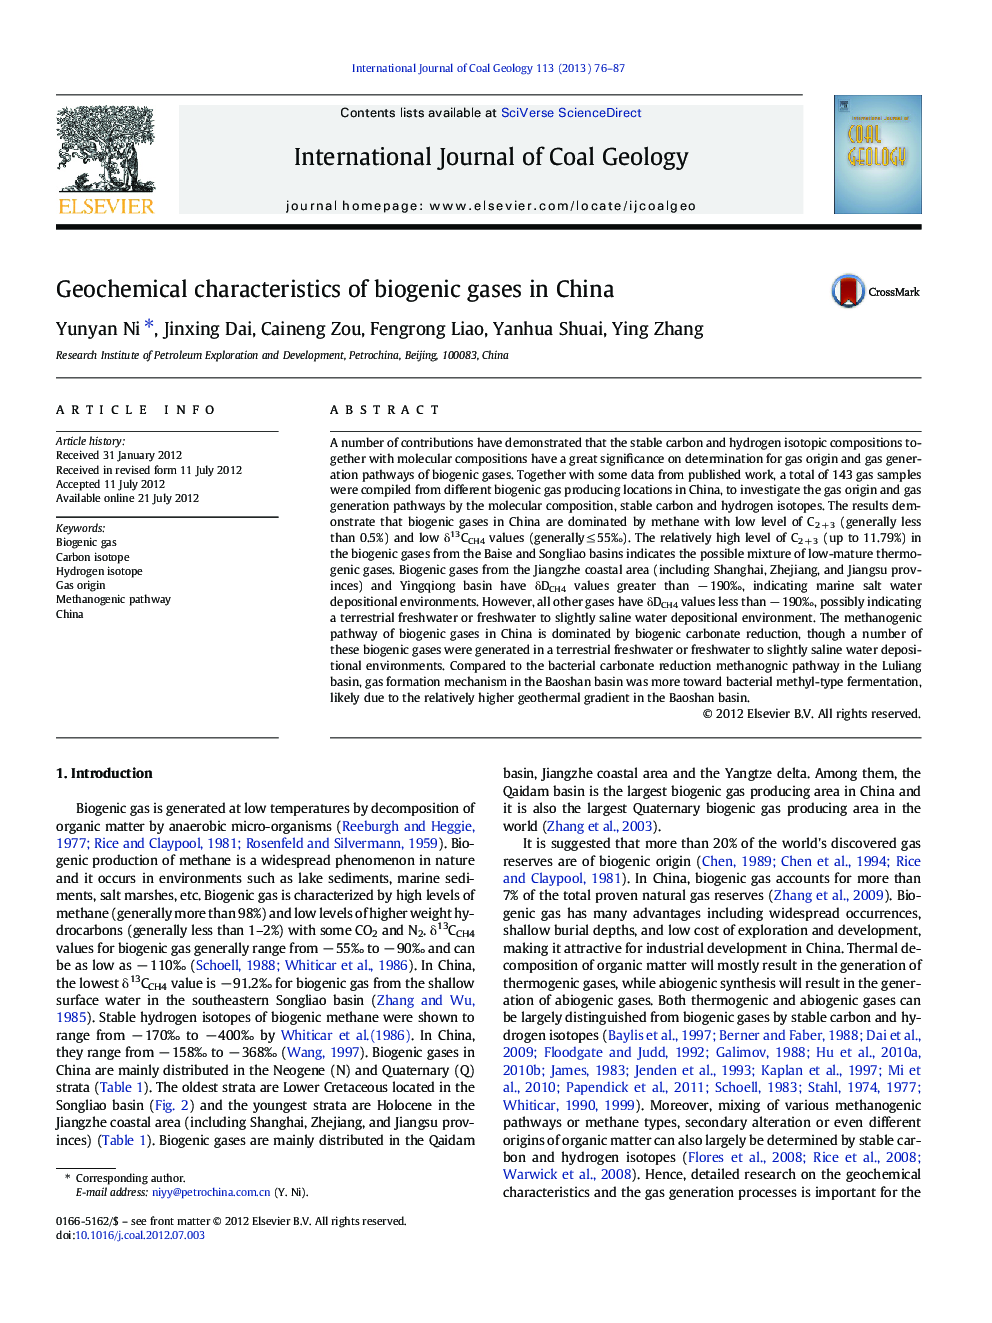 Geochemical characteristics of biogenic gases in China